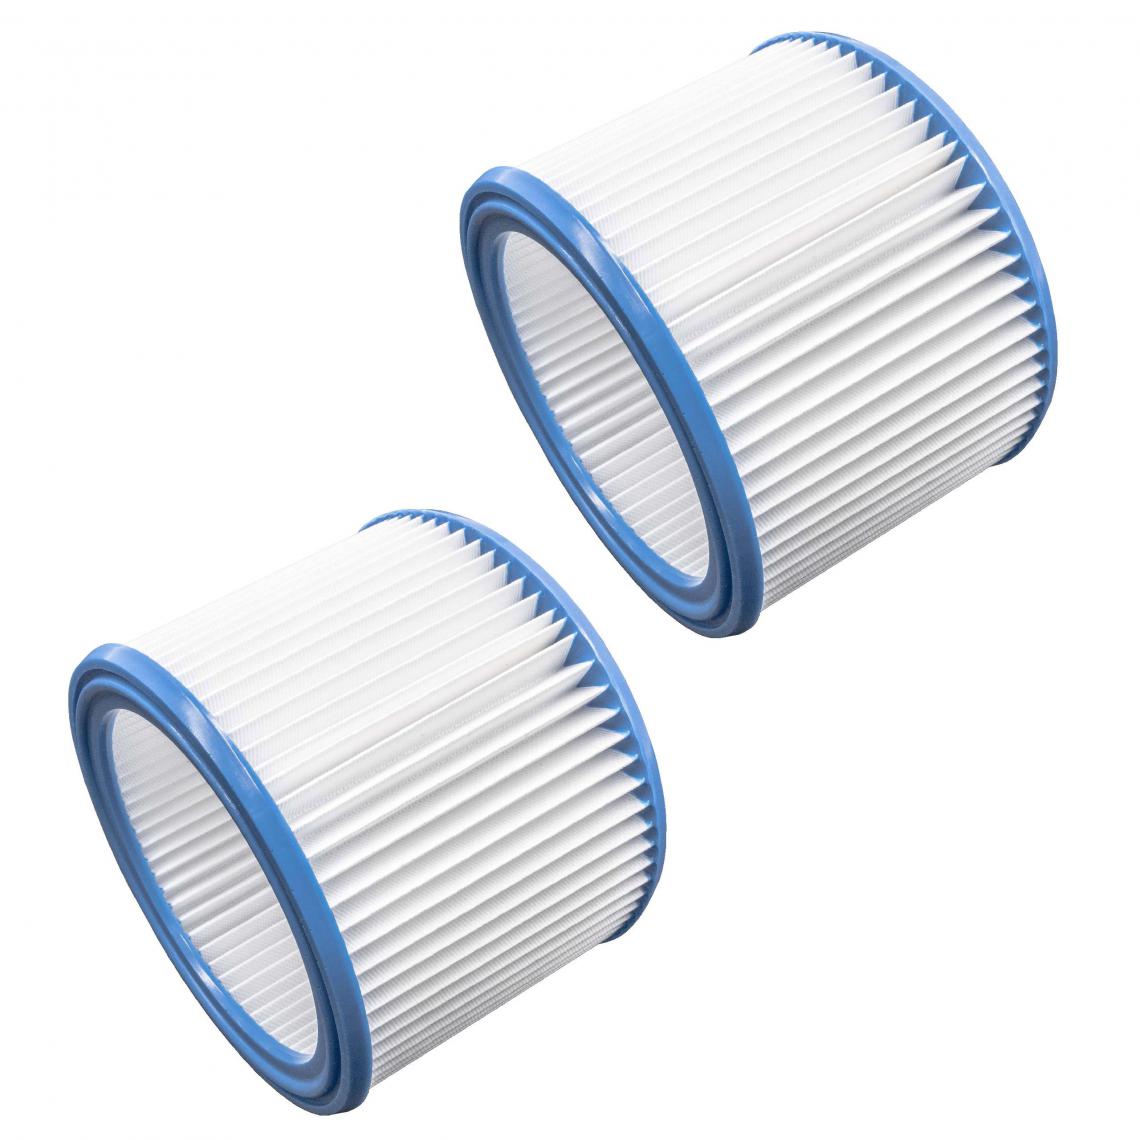 Vhbw - vhbw Set de filtres 2x Filtre plissé compatible avec JMP Inox 35 aspirateur à sec ou humide - Filtre à cartouche - Accessoire entretien des sols